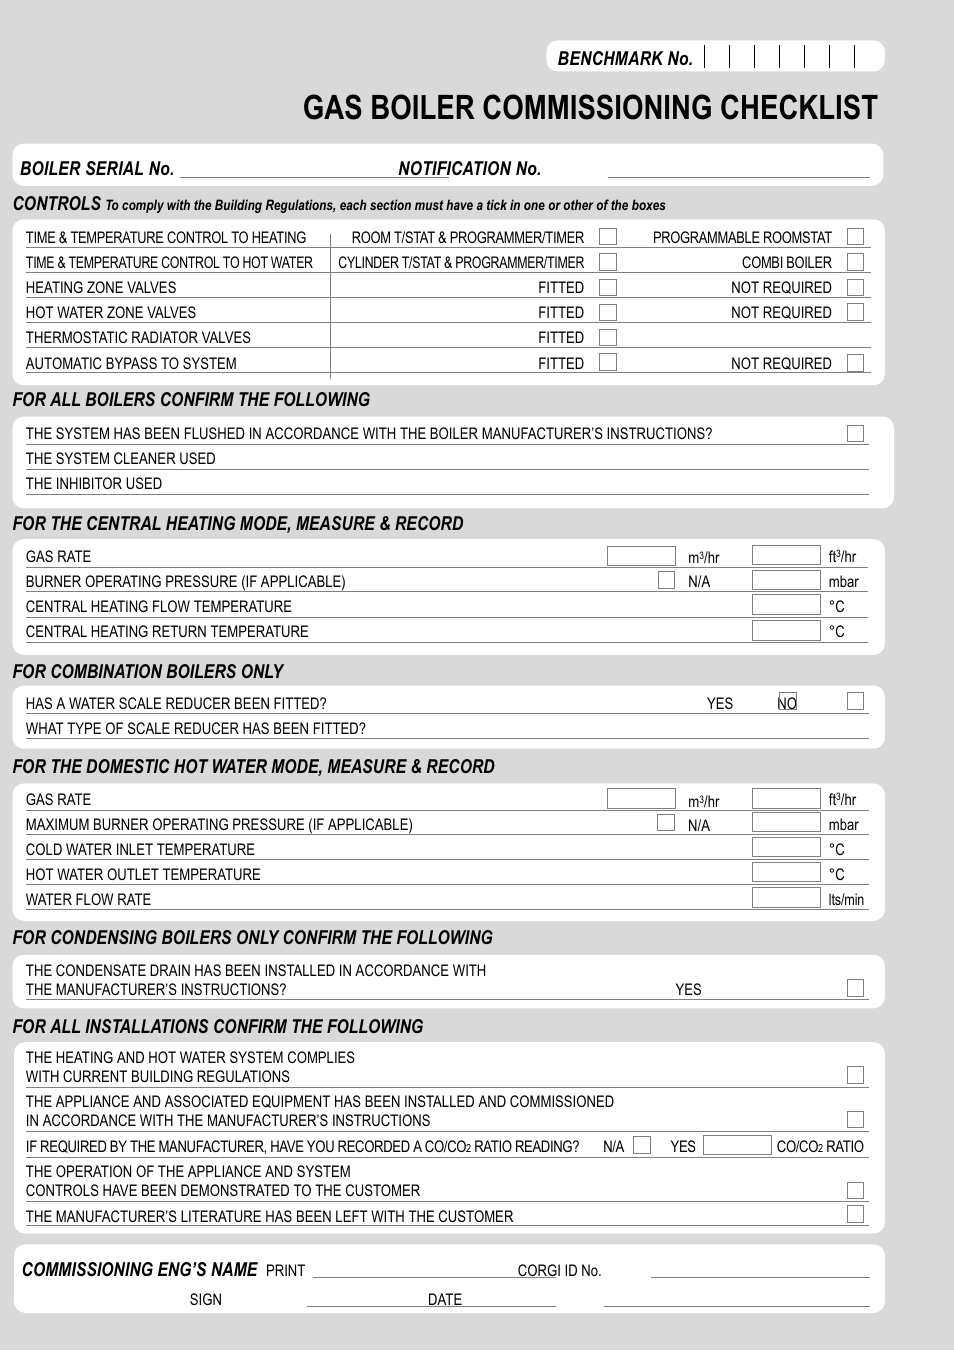 Gas boiler commissioning checklist | Bosch GREENSTAR 24i junior User Manual  | Page 60 / 62 | Original mode